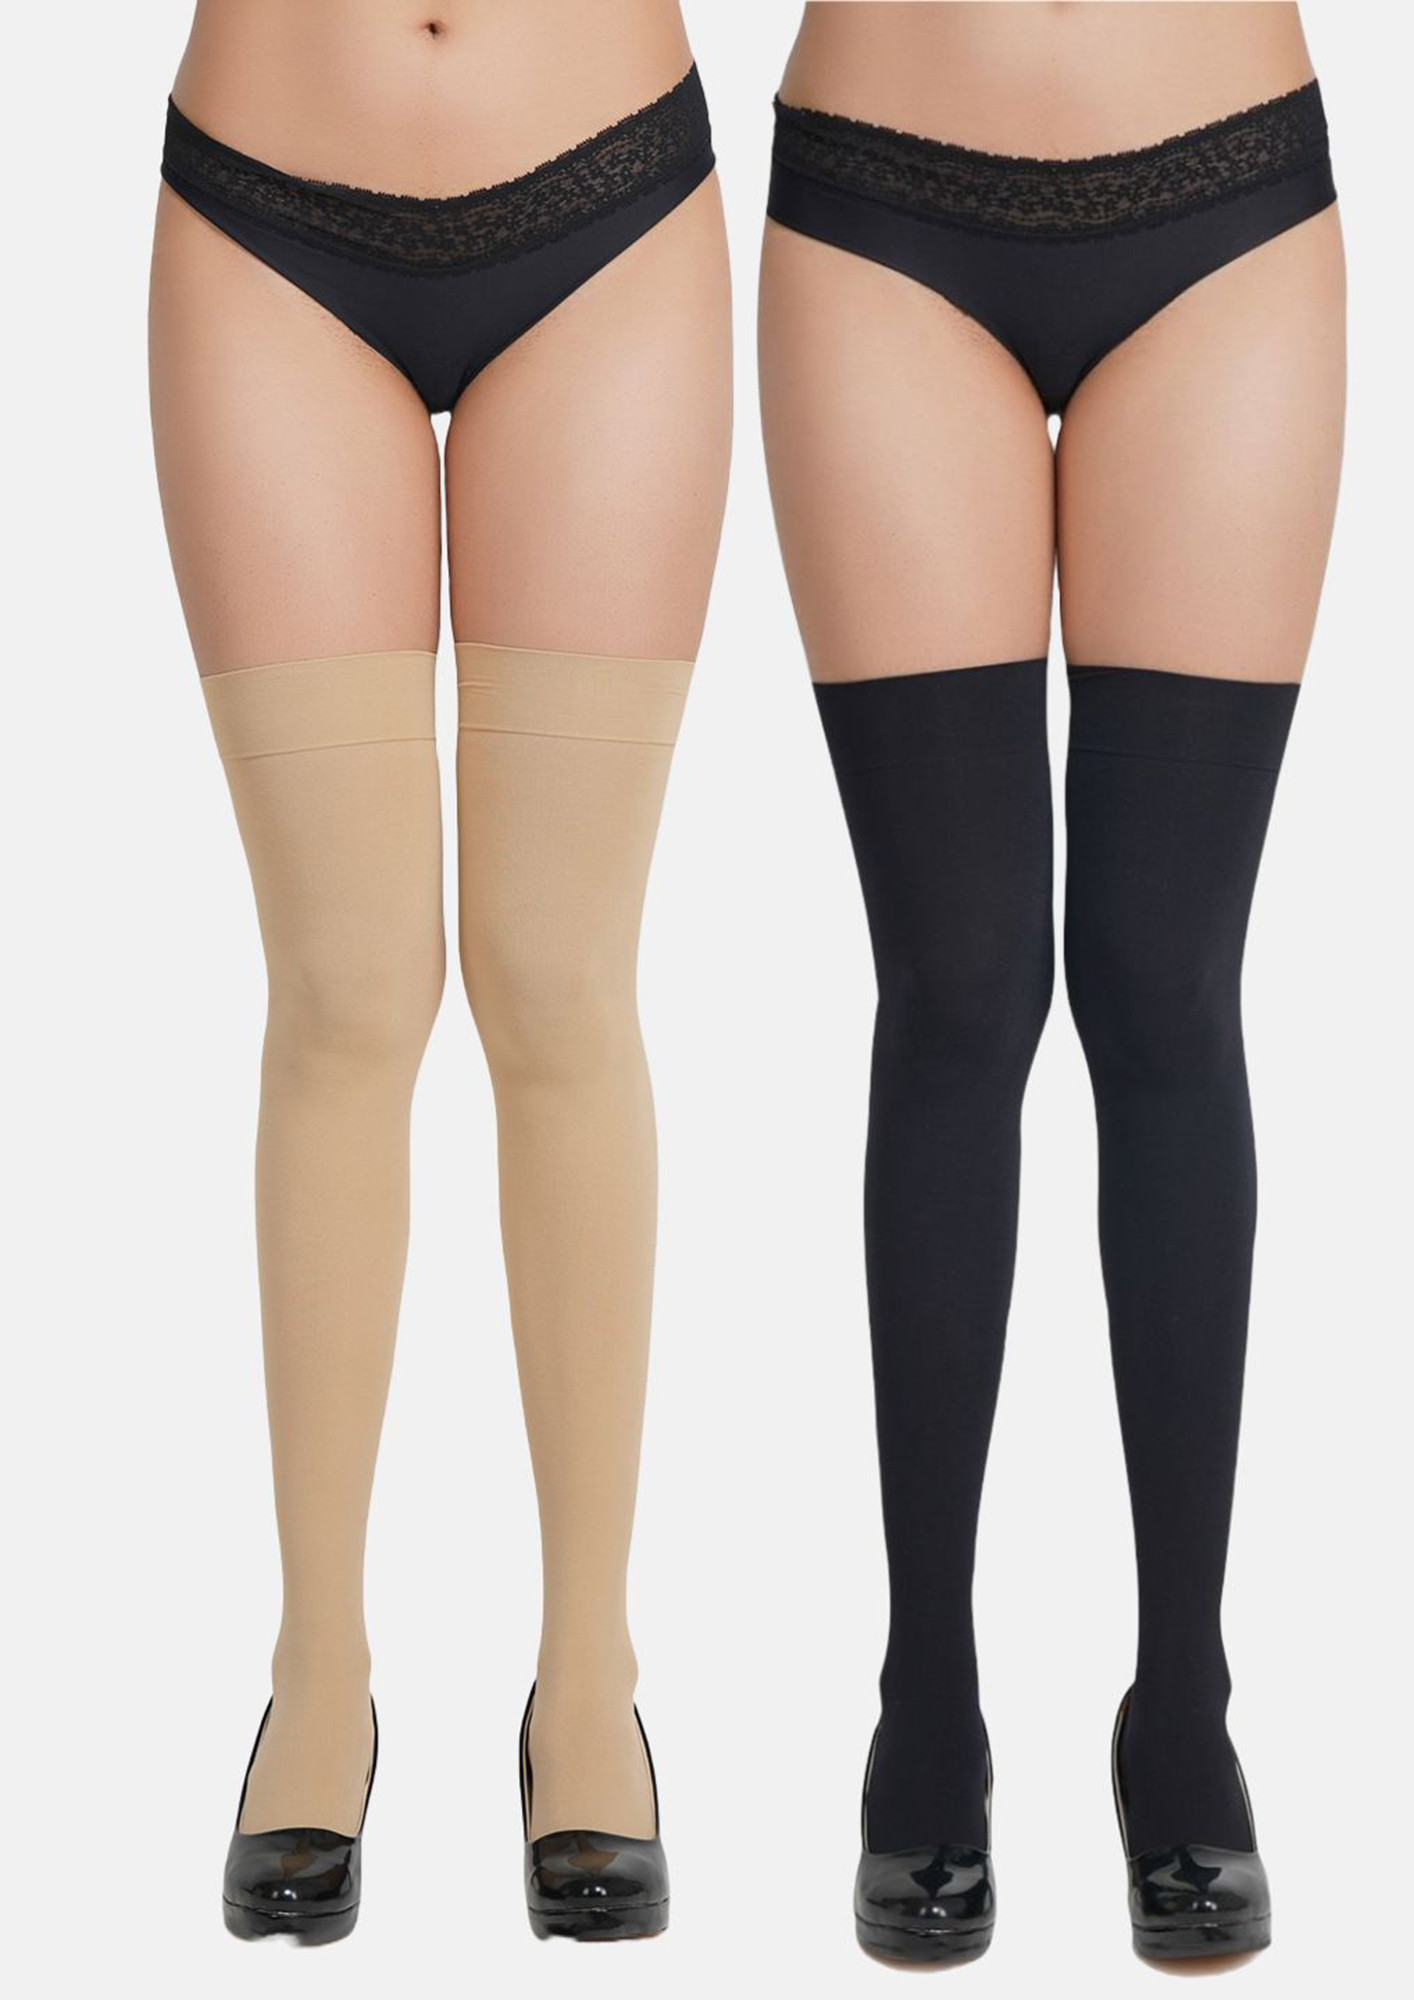 Women's Stockings - Buy Stockings for Women Online in India